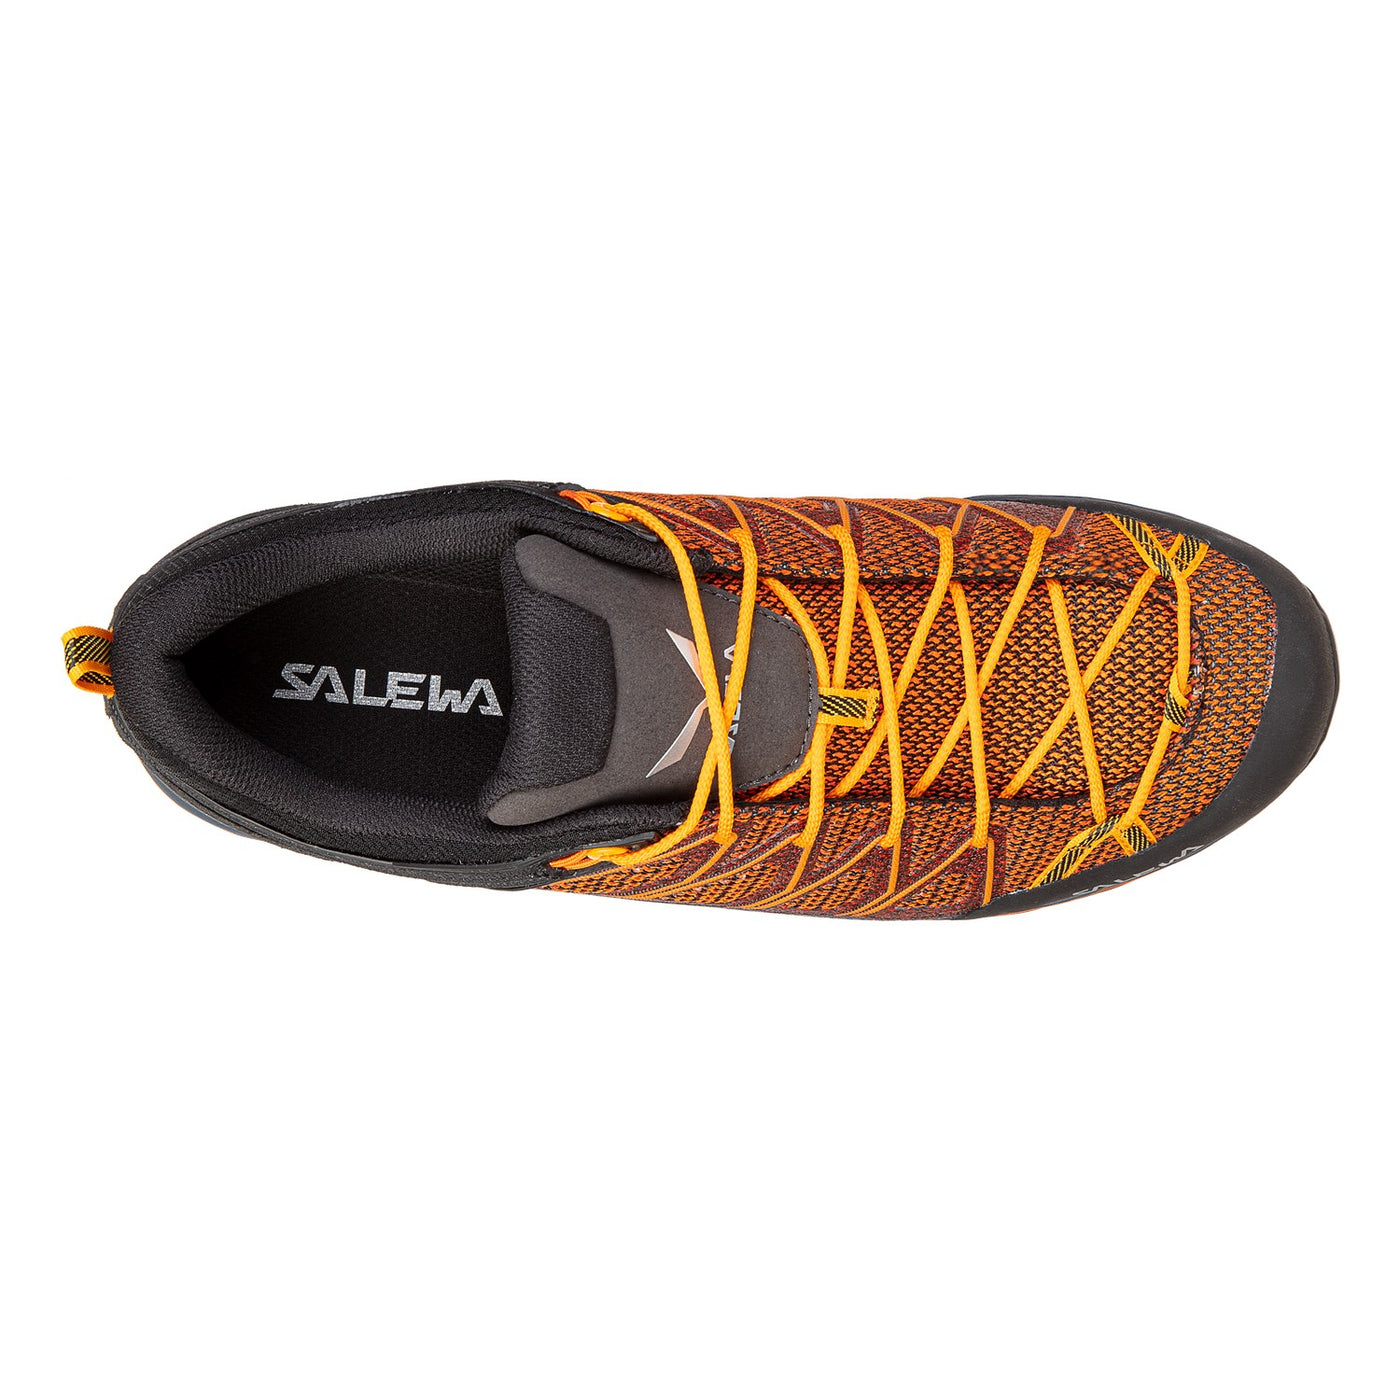 Salewa Mountain Trainer Lite | Lightweight Hiking Shoes | Christchurch